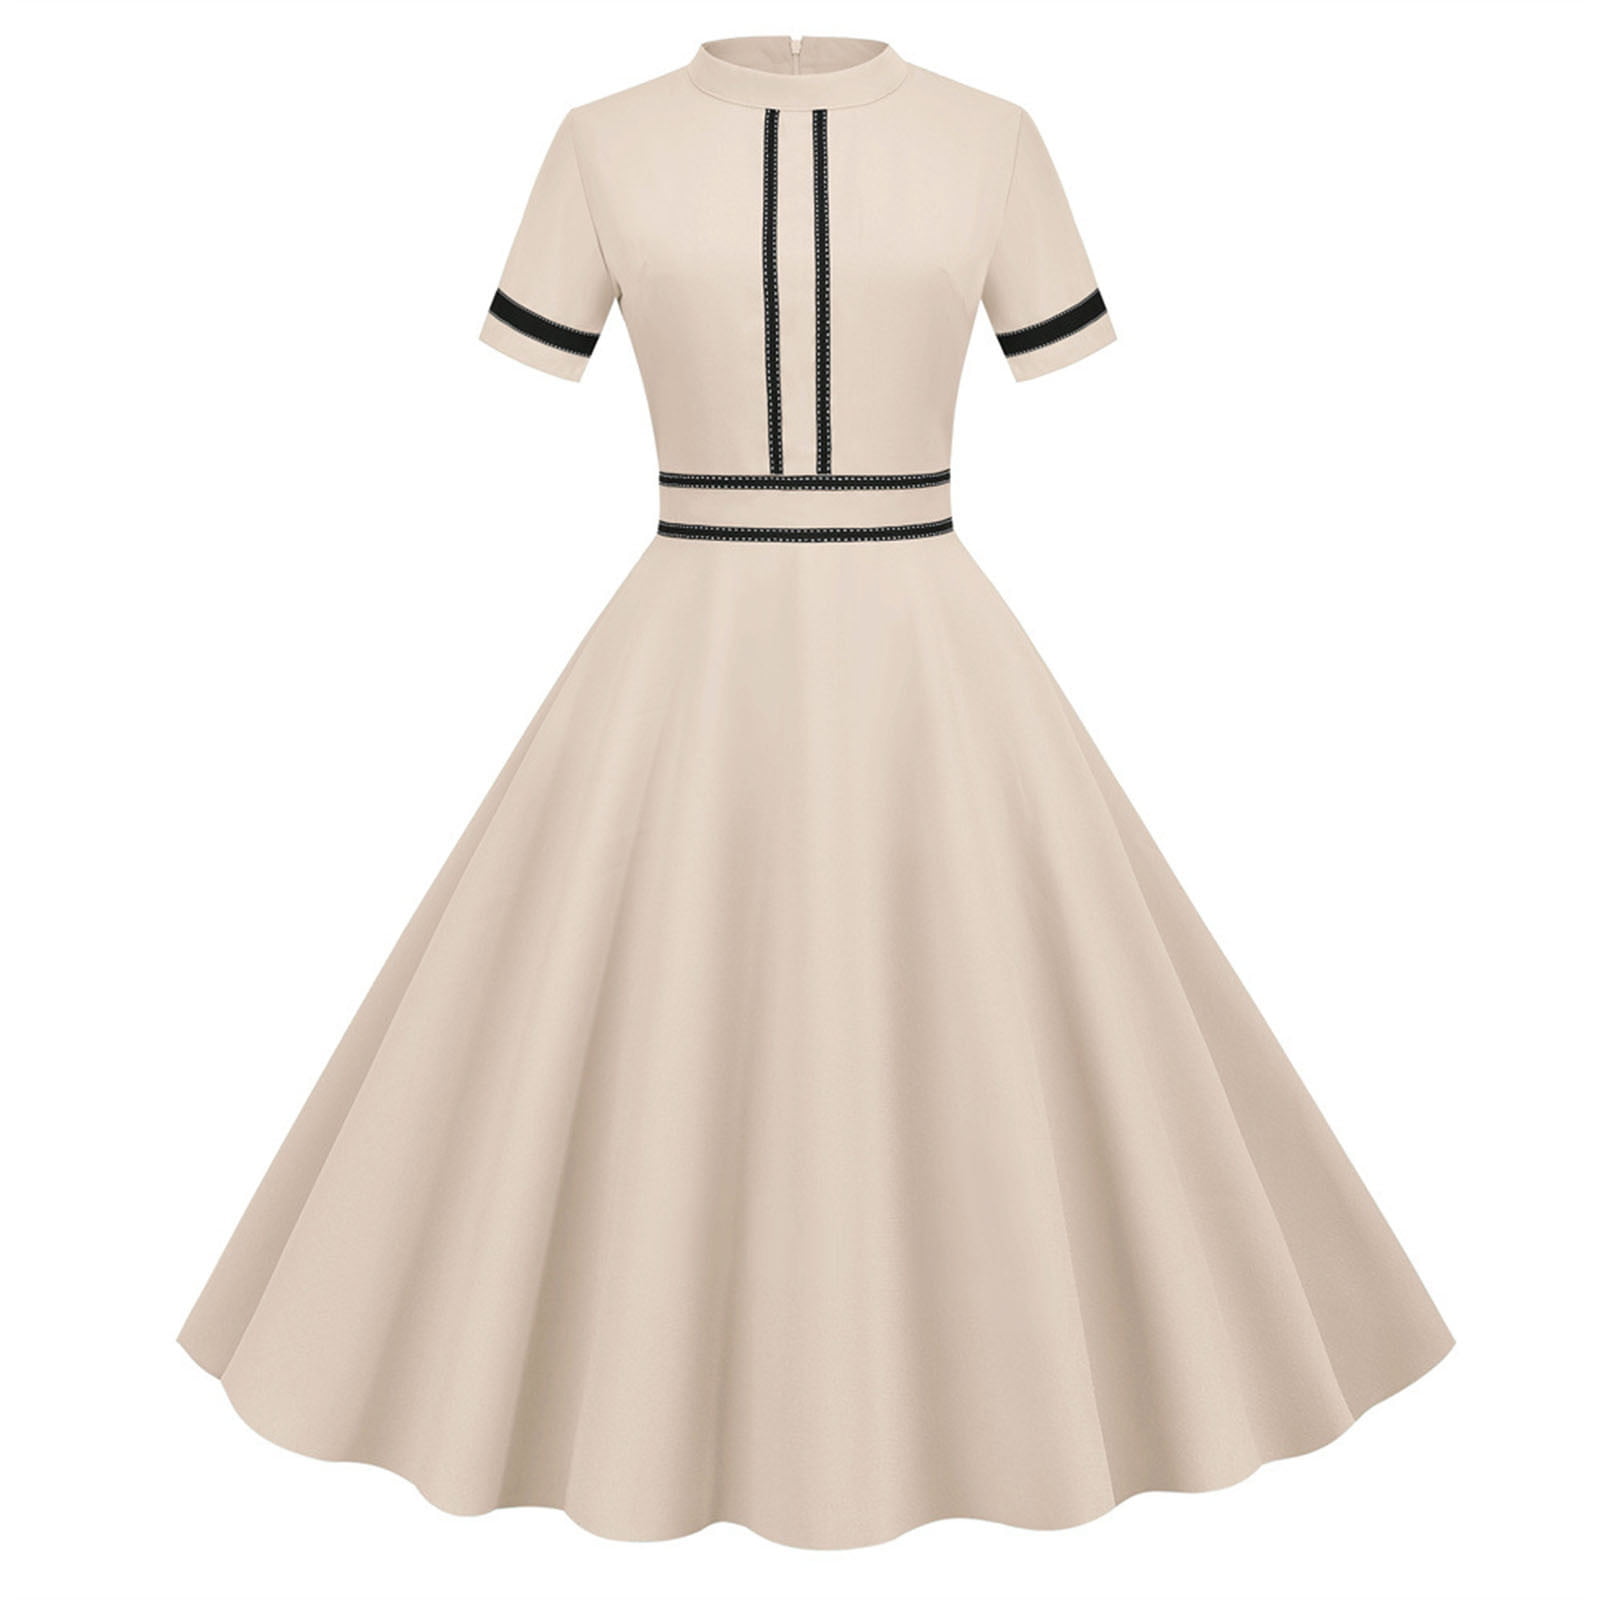  Womens Vintage 1950s Retro Prom Dress Corset A-Line